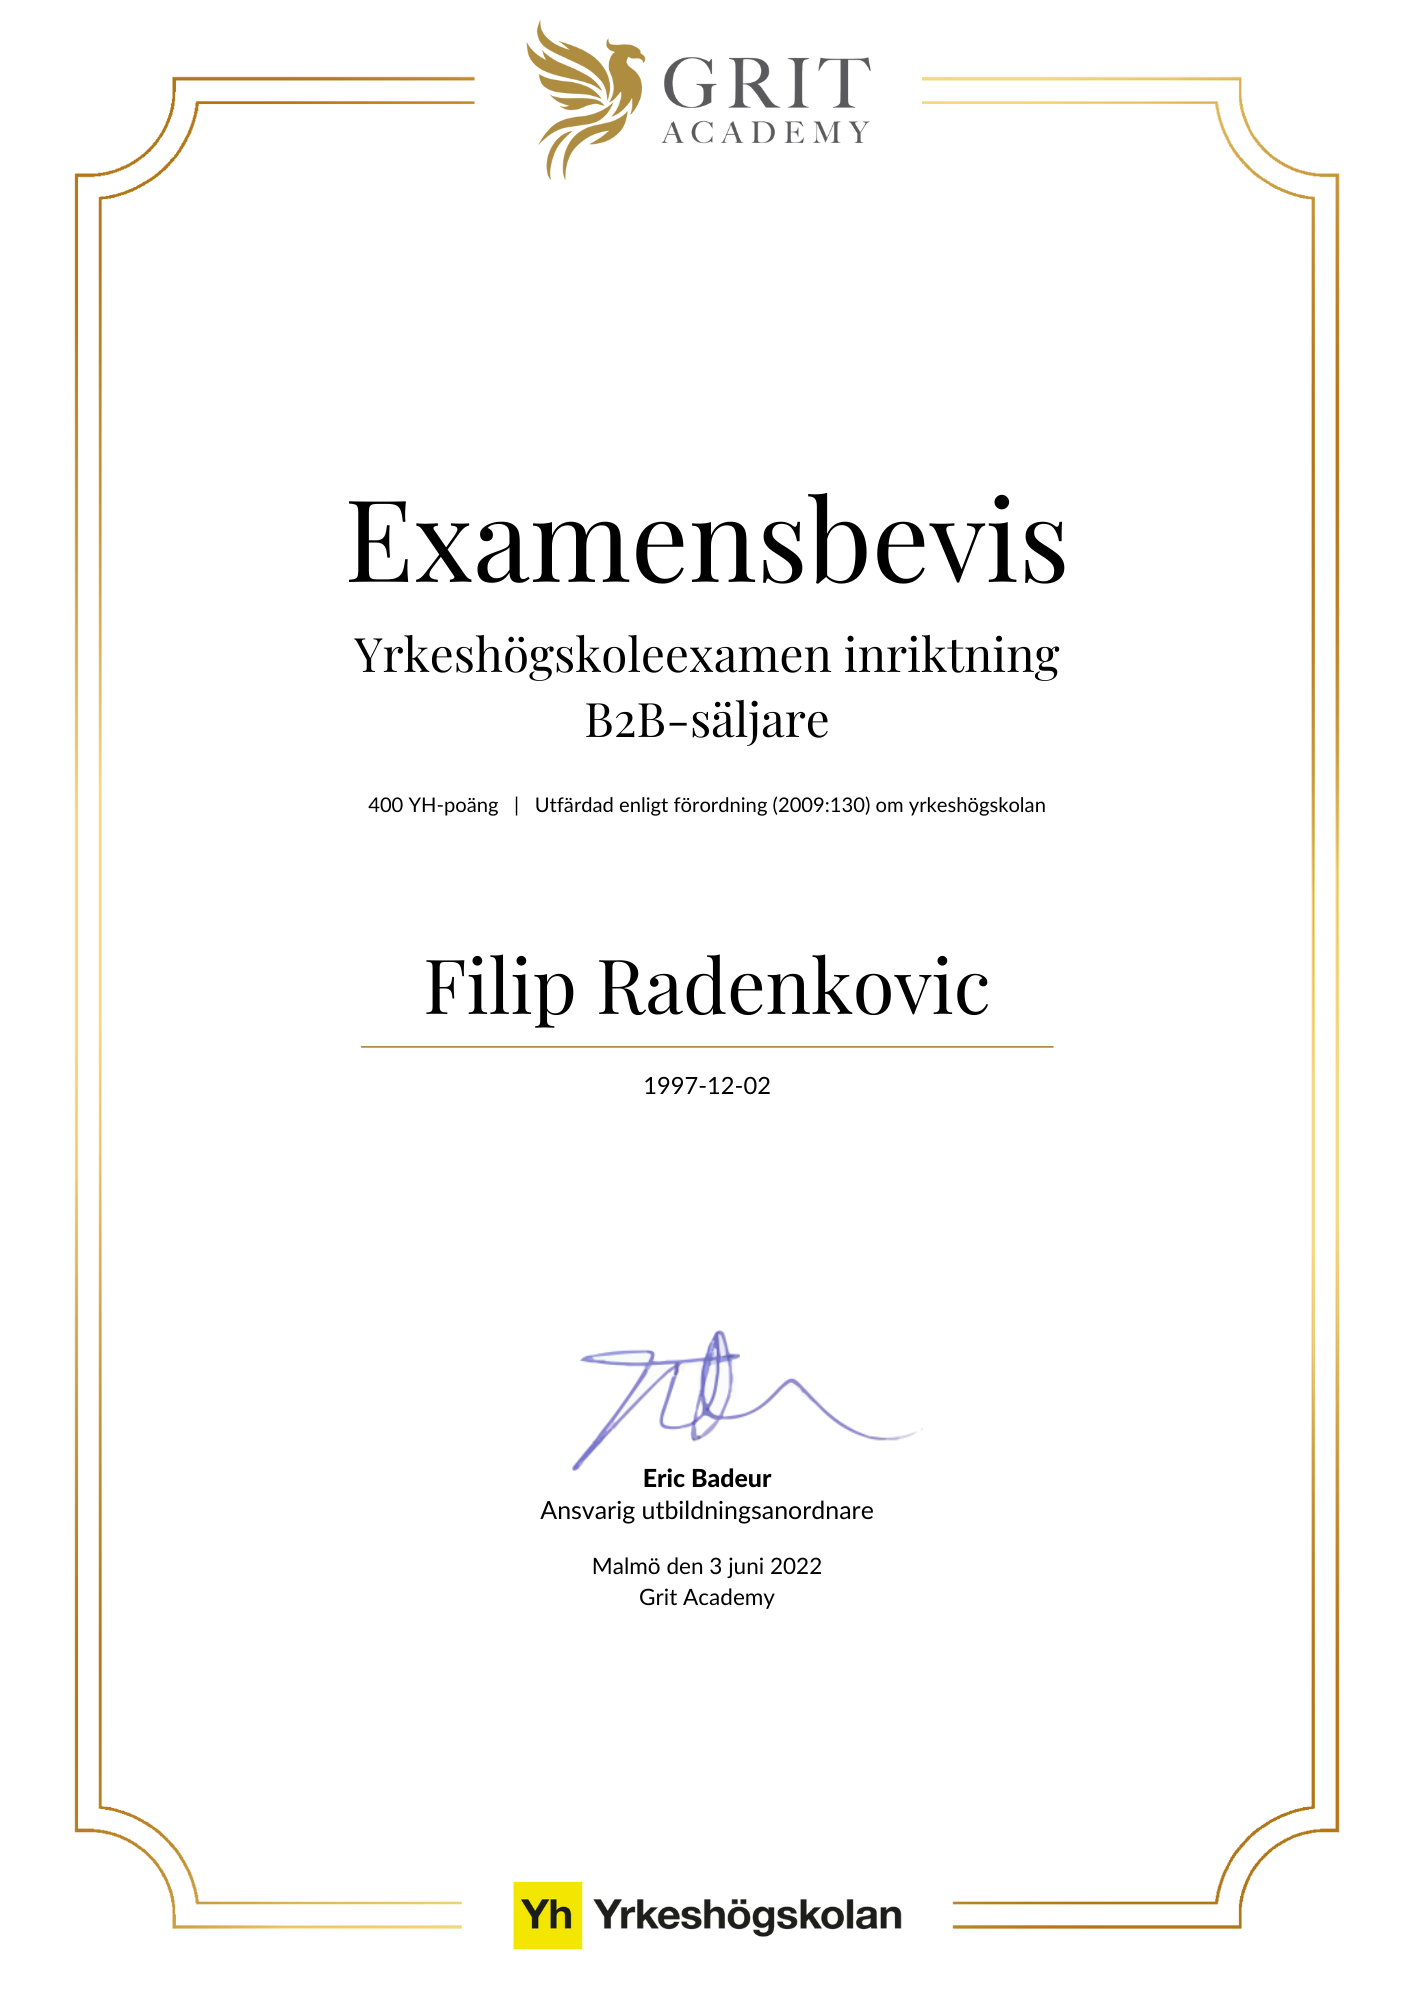 Examensbevis Filip Radenkovic